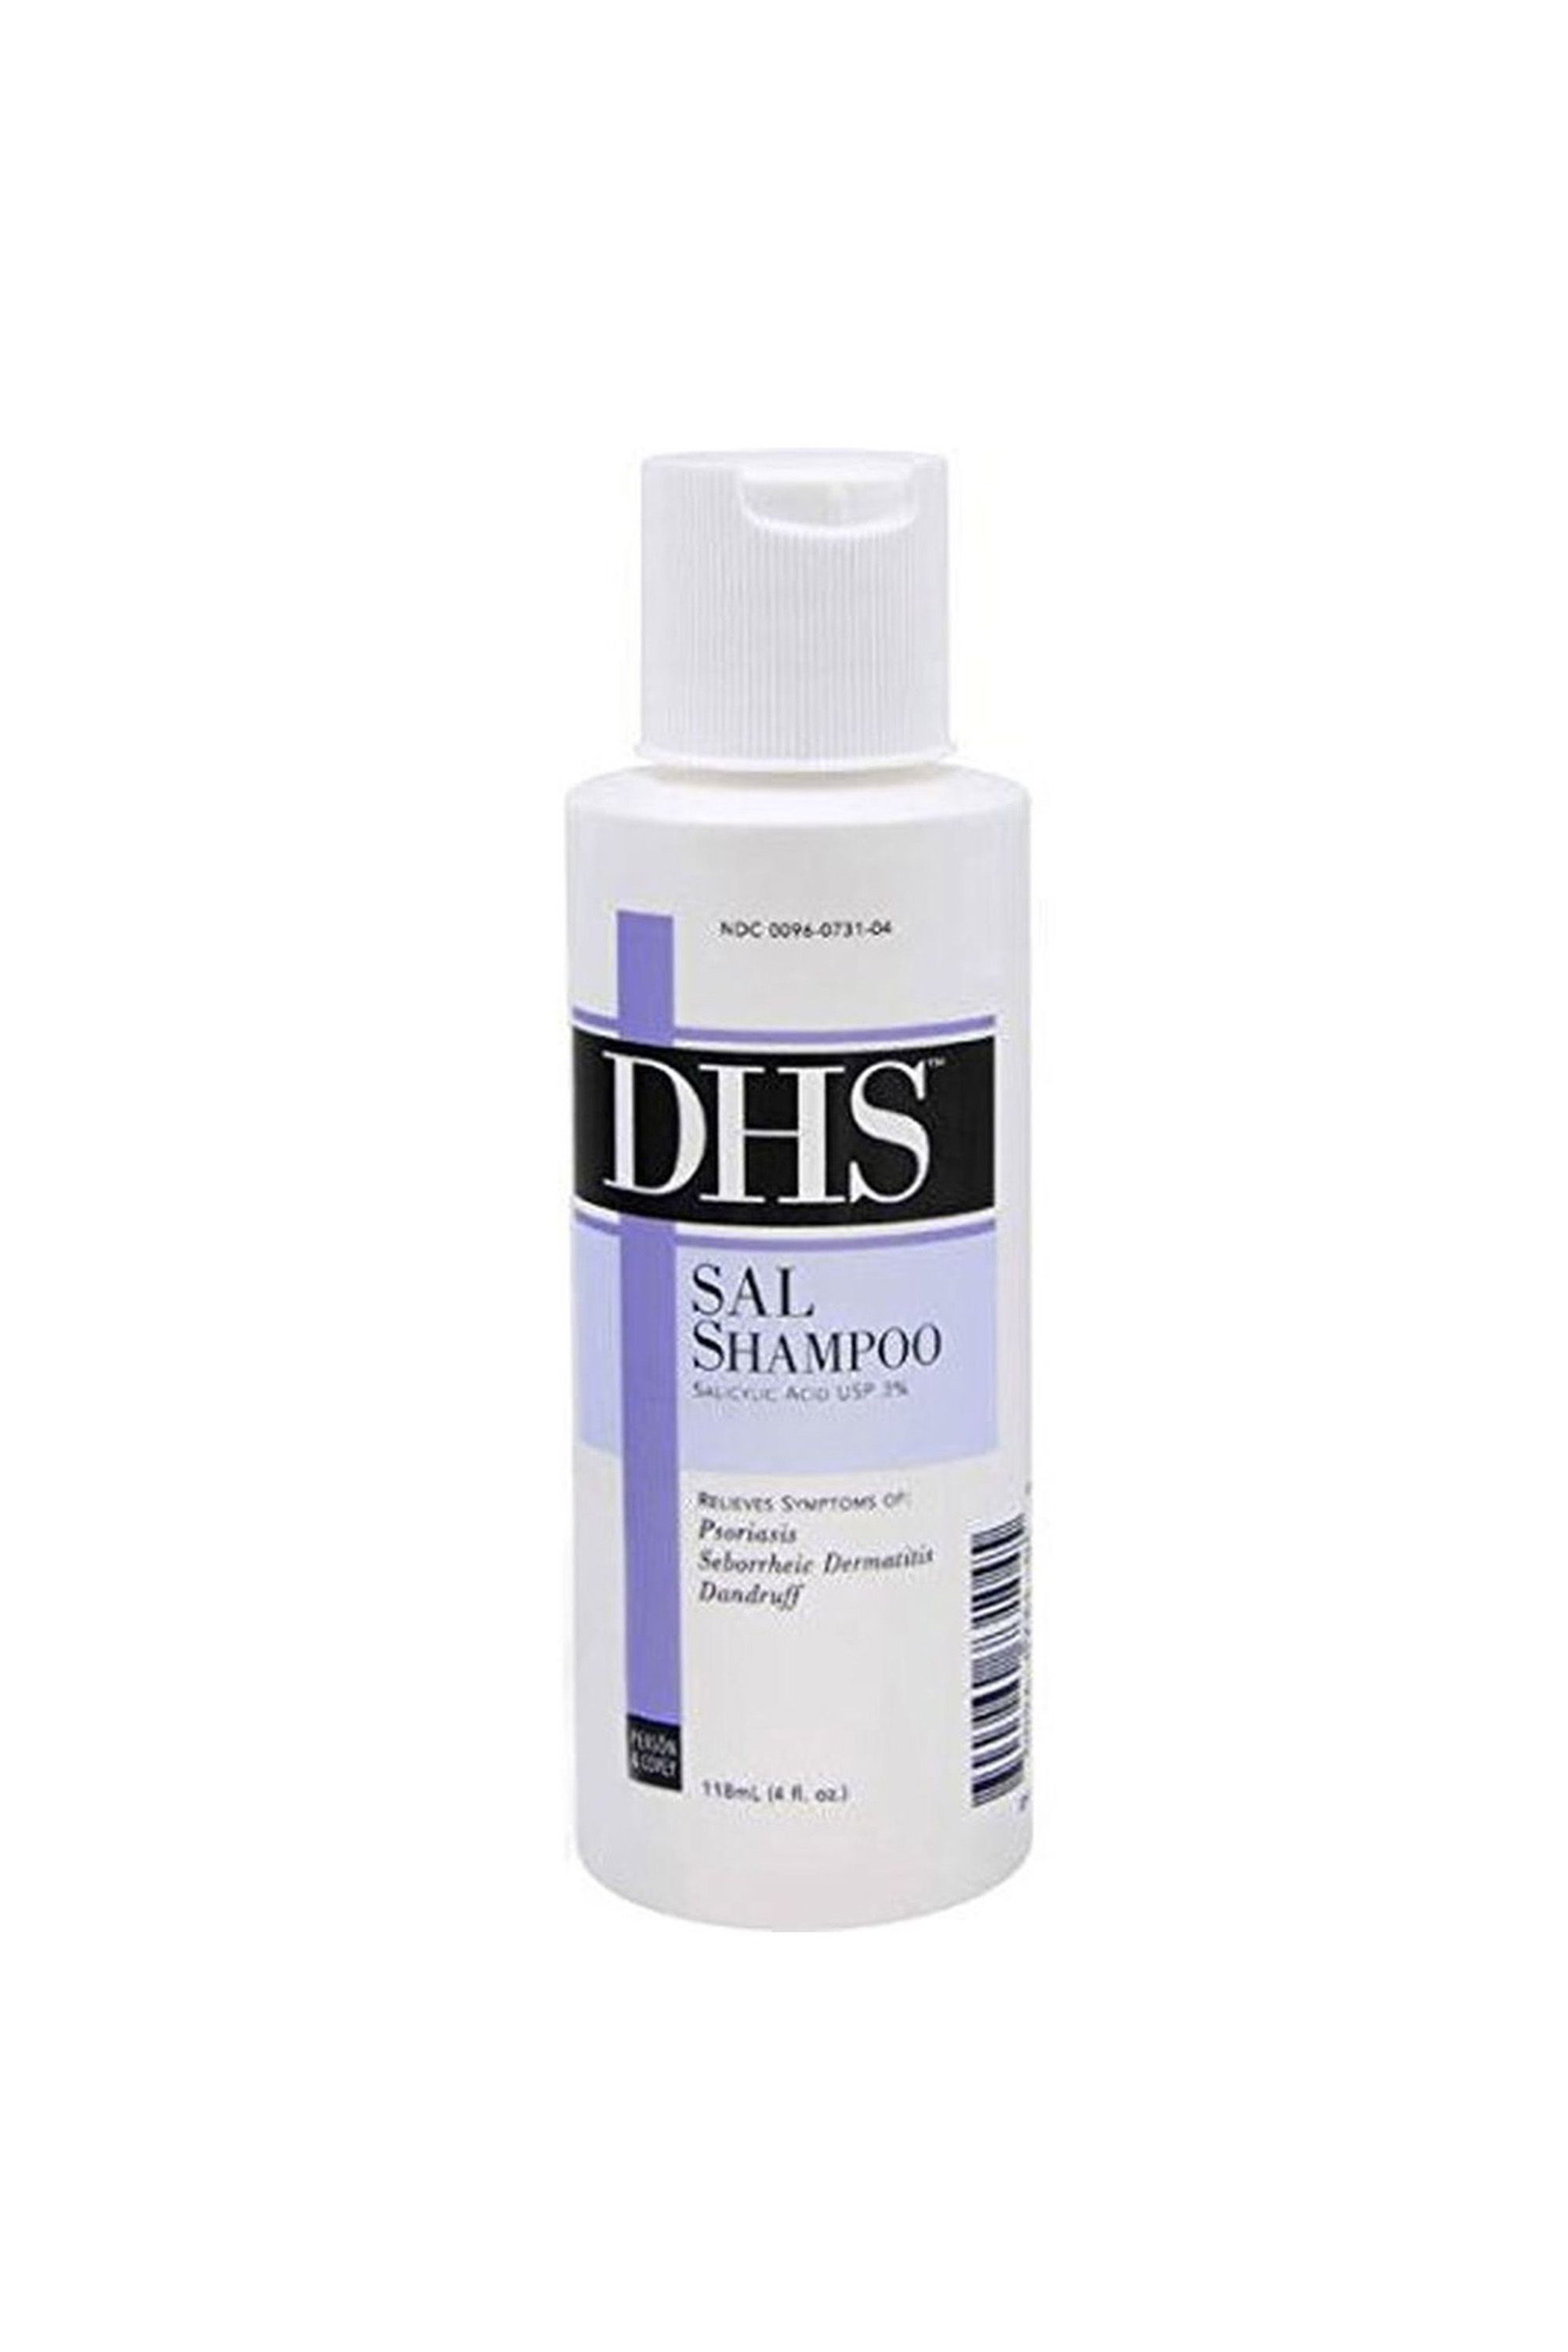 DHS SAL Shampoo Maximum Strength